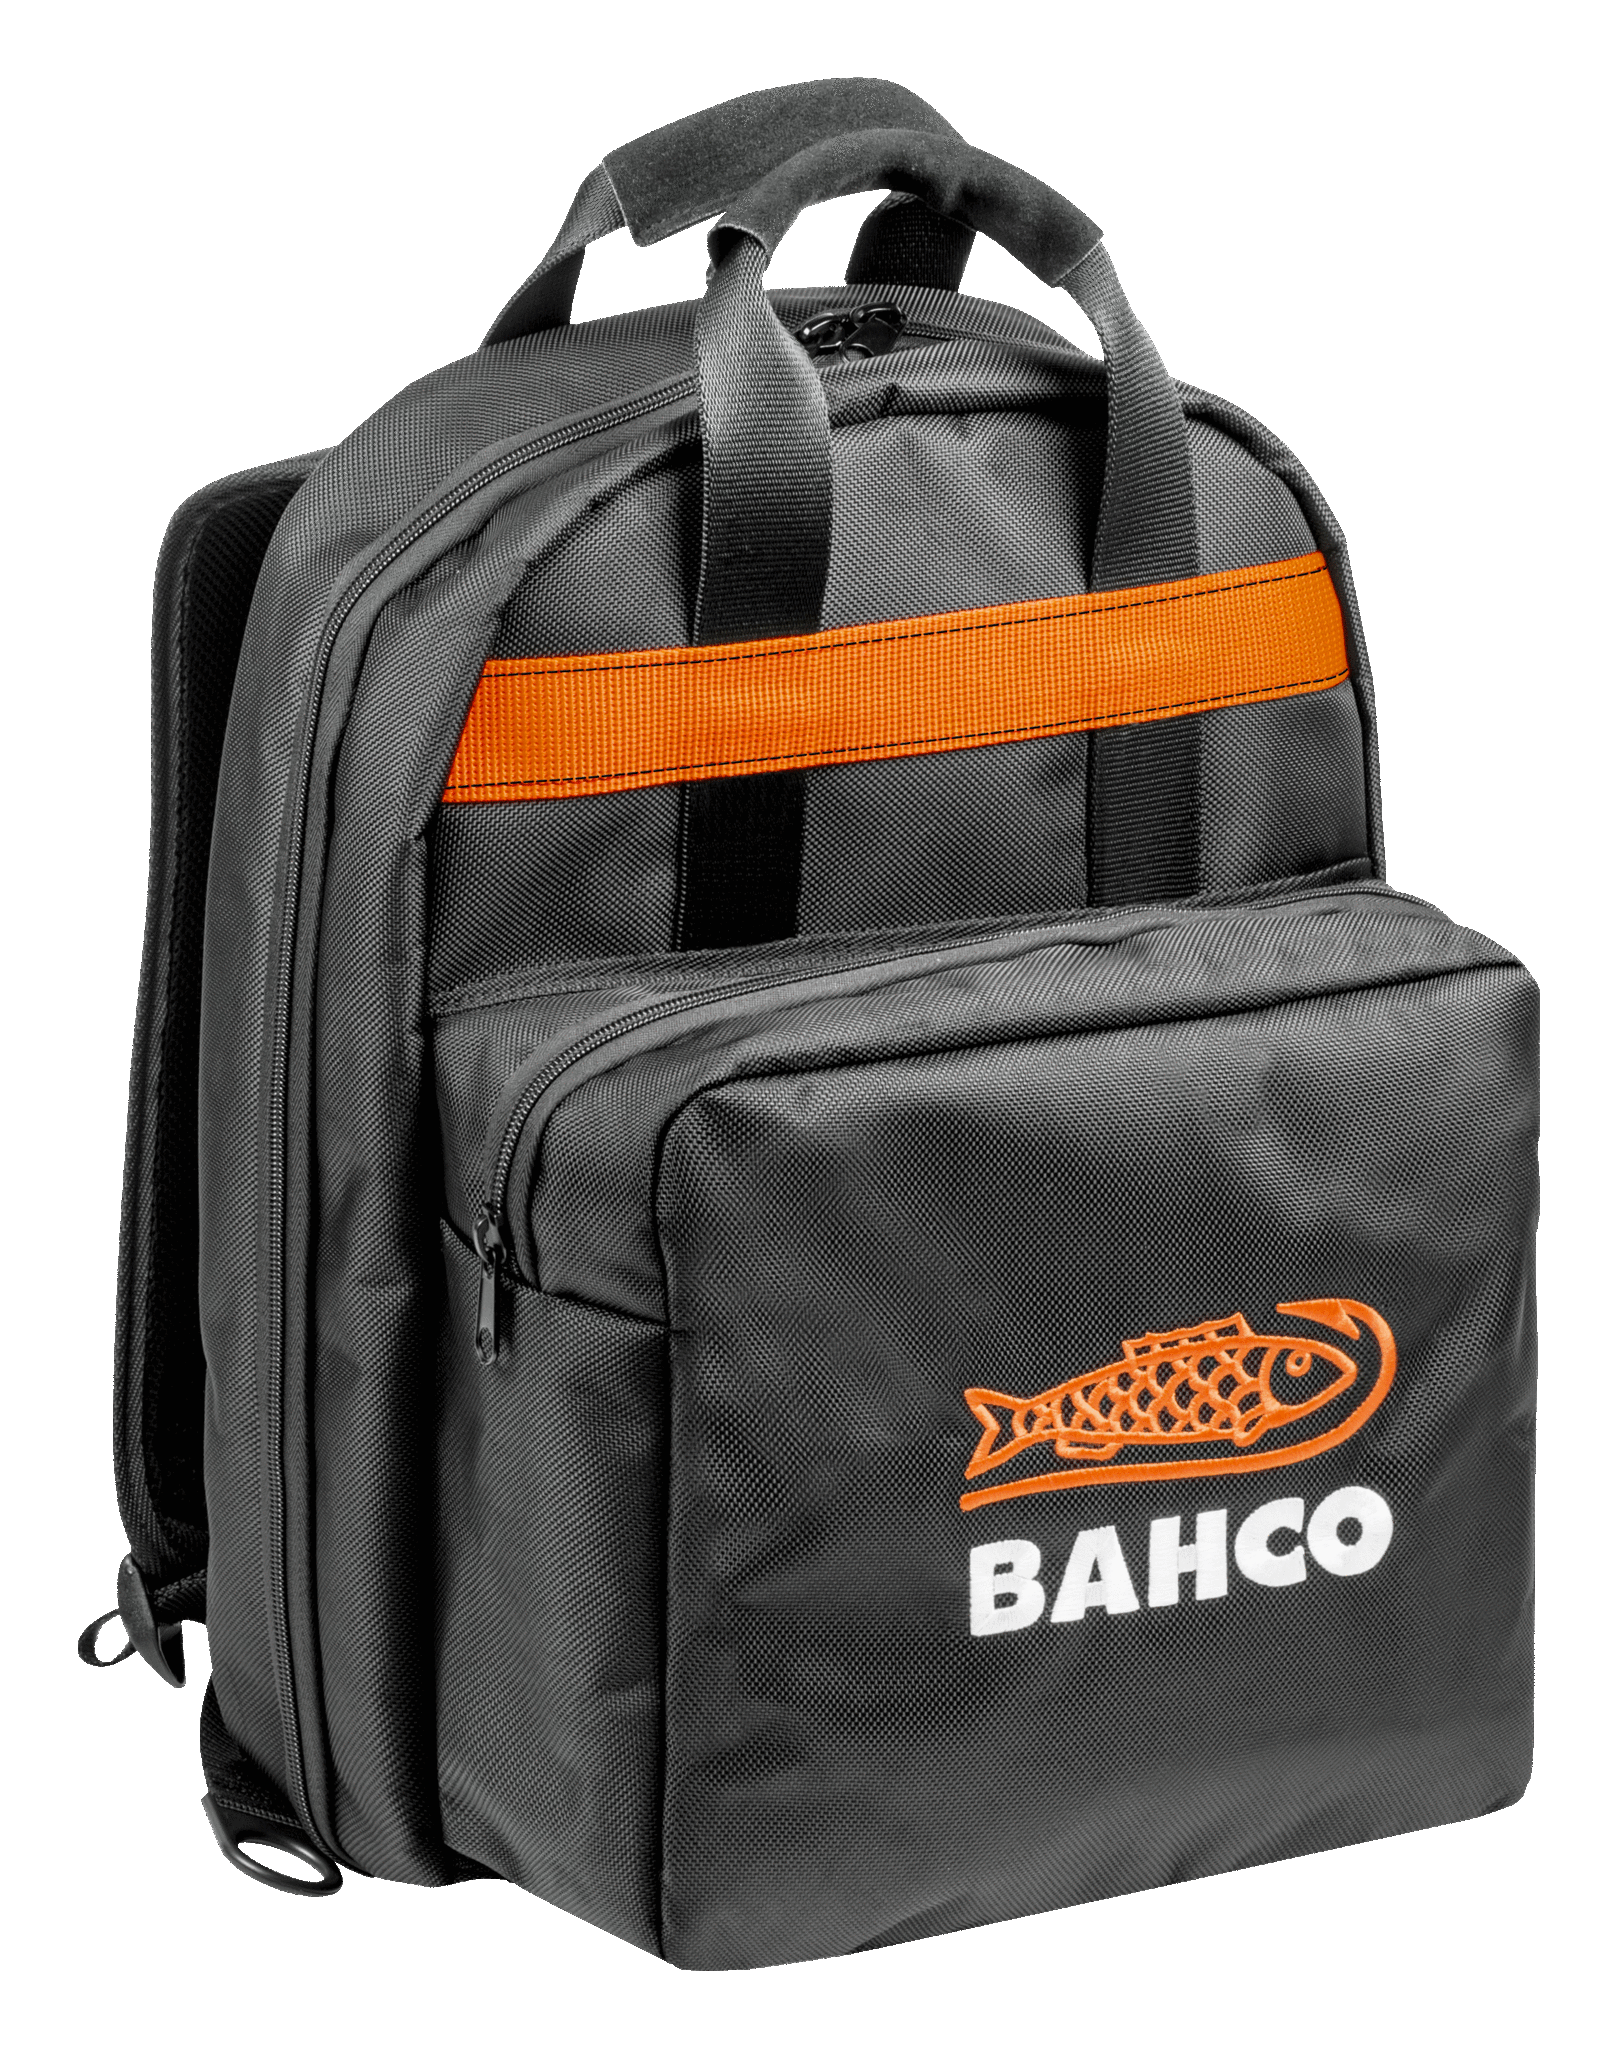 BAHCO(バーコ) Back Pack リュックサック ラージ 3875-BP2 - 5